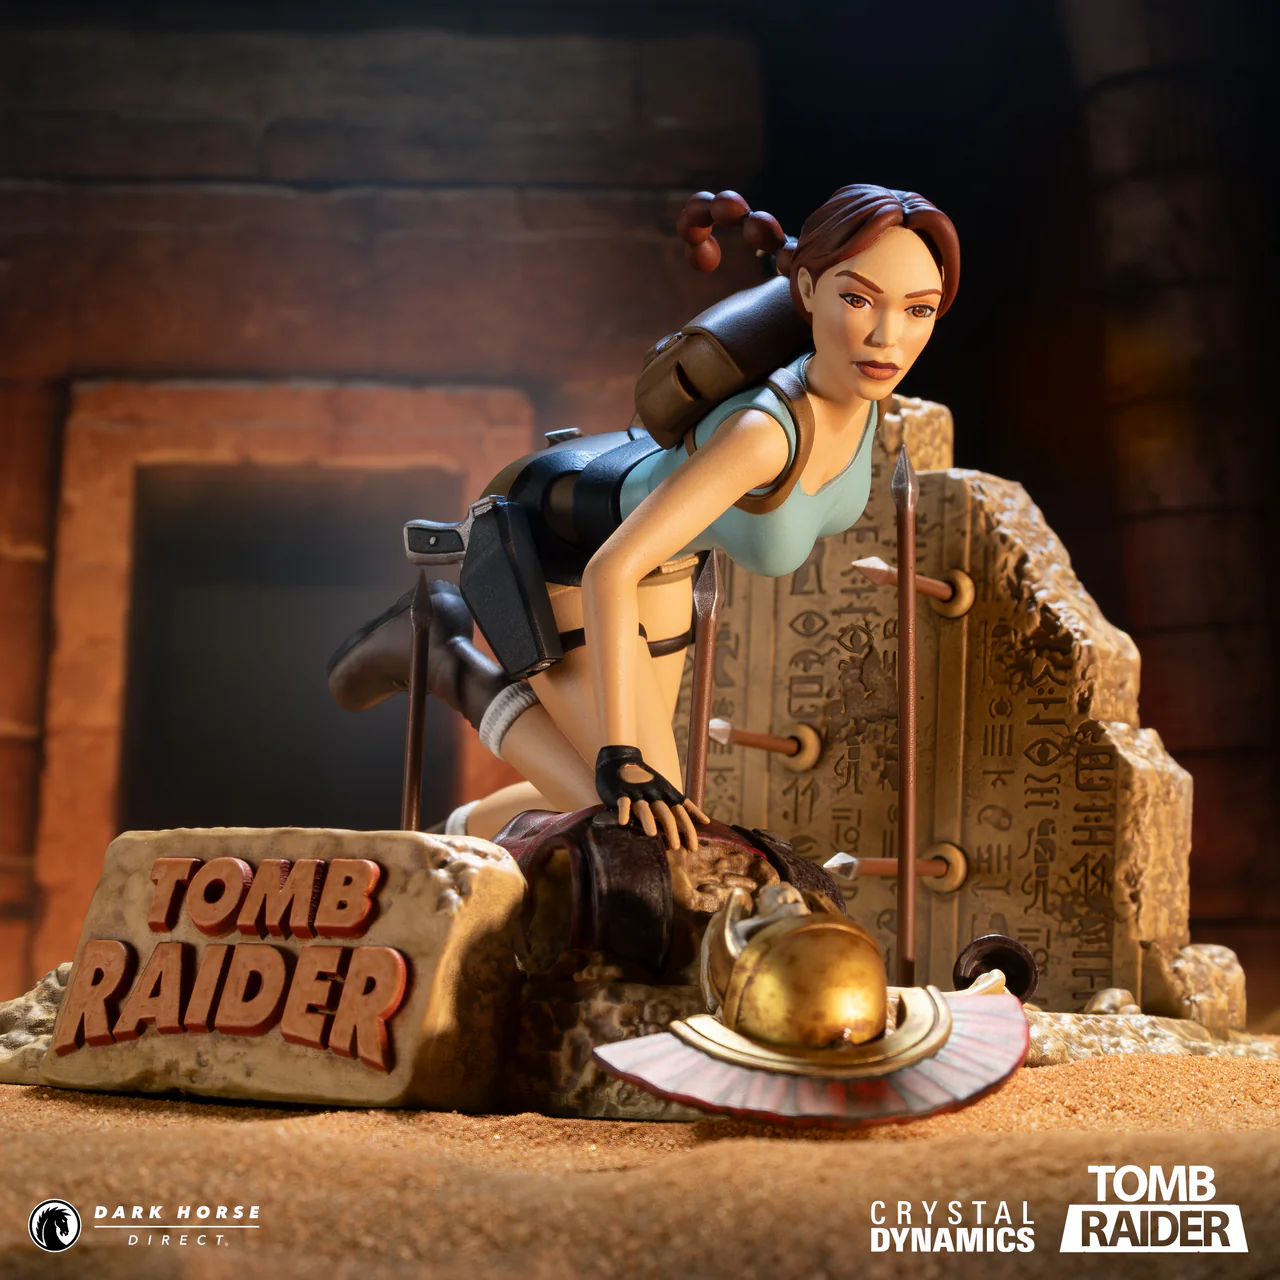 TOMB RAIDER: Lara Croft (Classic Era) PVC Statue by Dark Horse Direct depicts Lara navigating a spike trap.